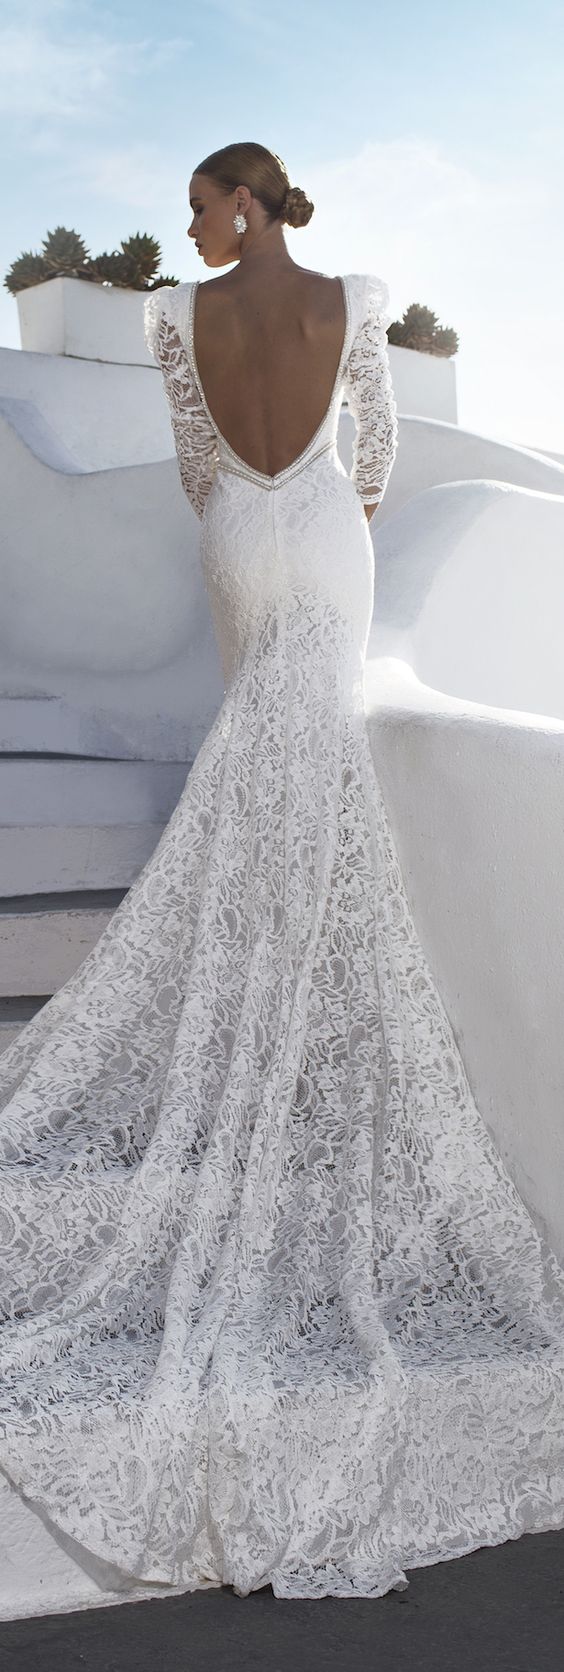 Lace Wedding Dress by Julie Vino - Santorini Collection 2016